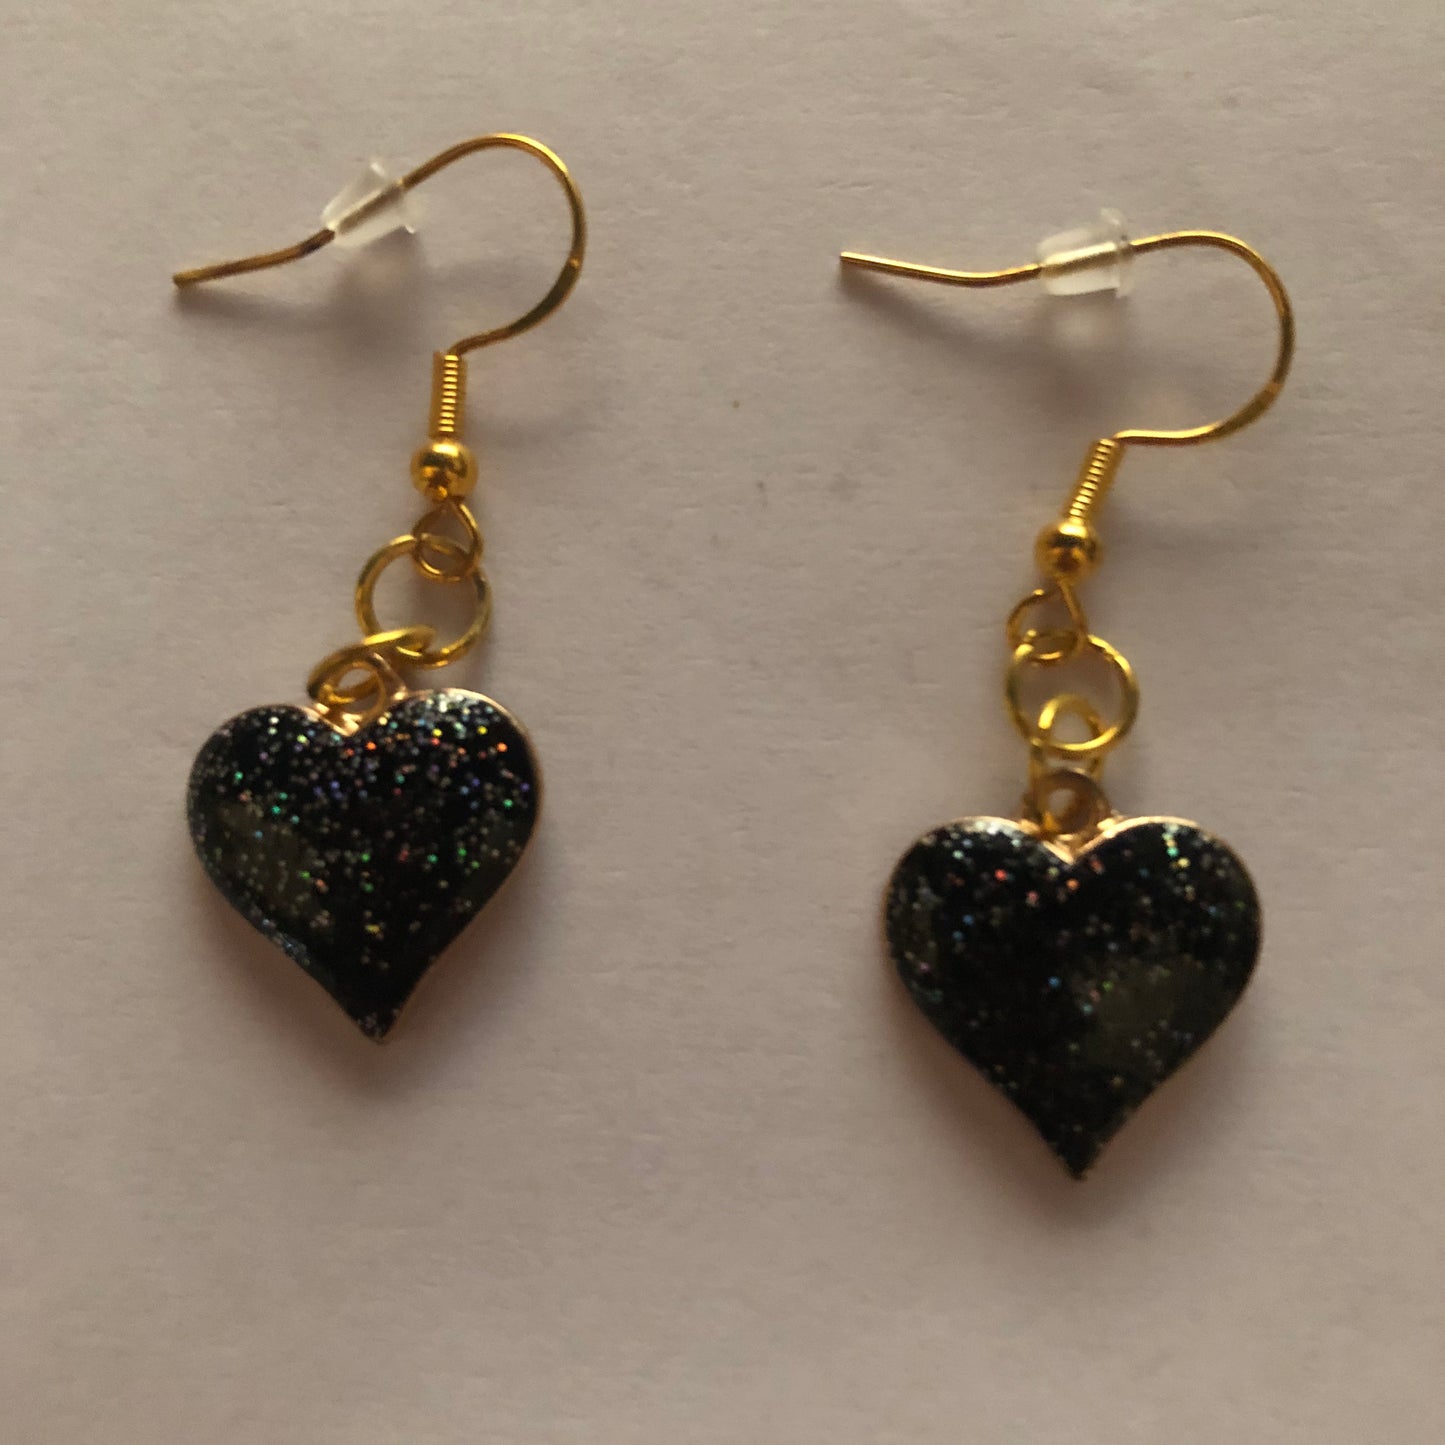 Valentine’s Day heart-shaped earrings